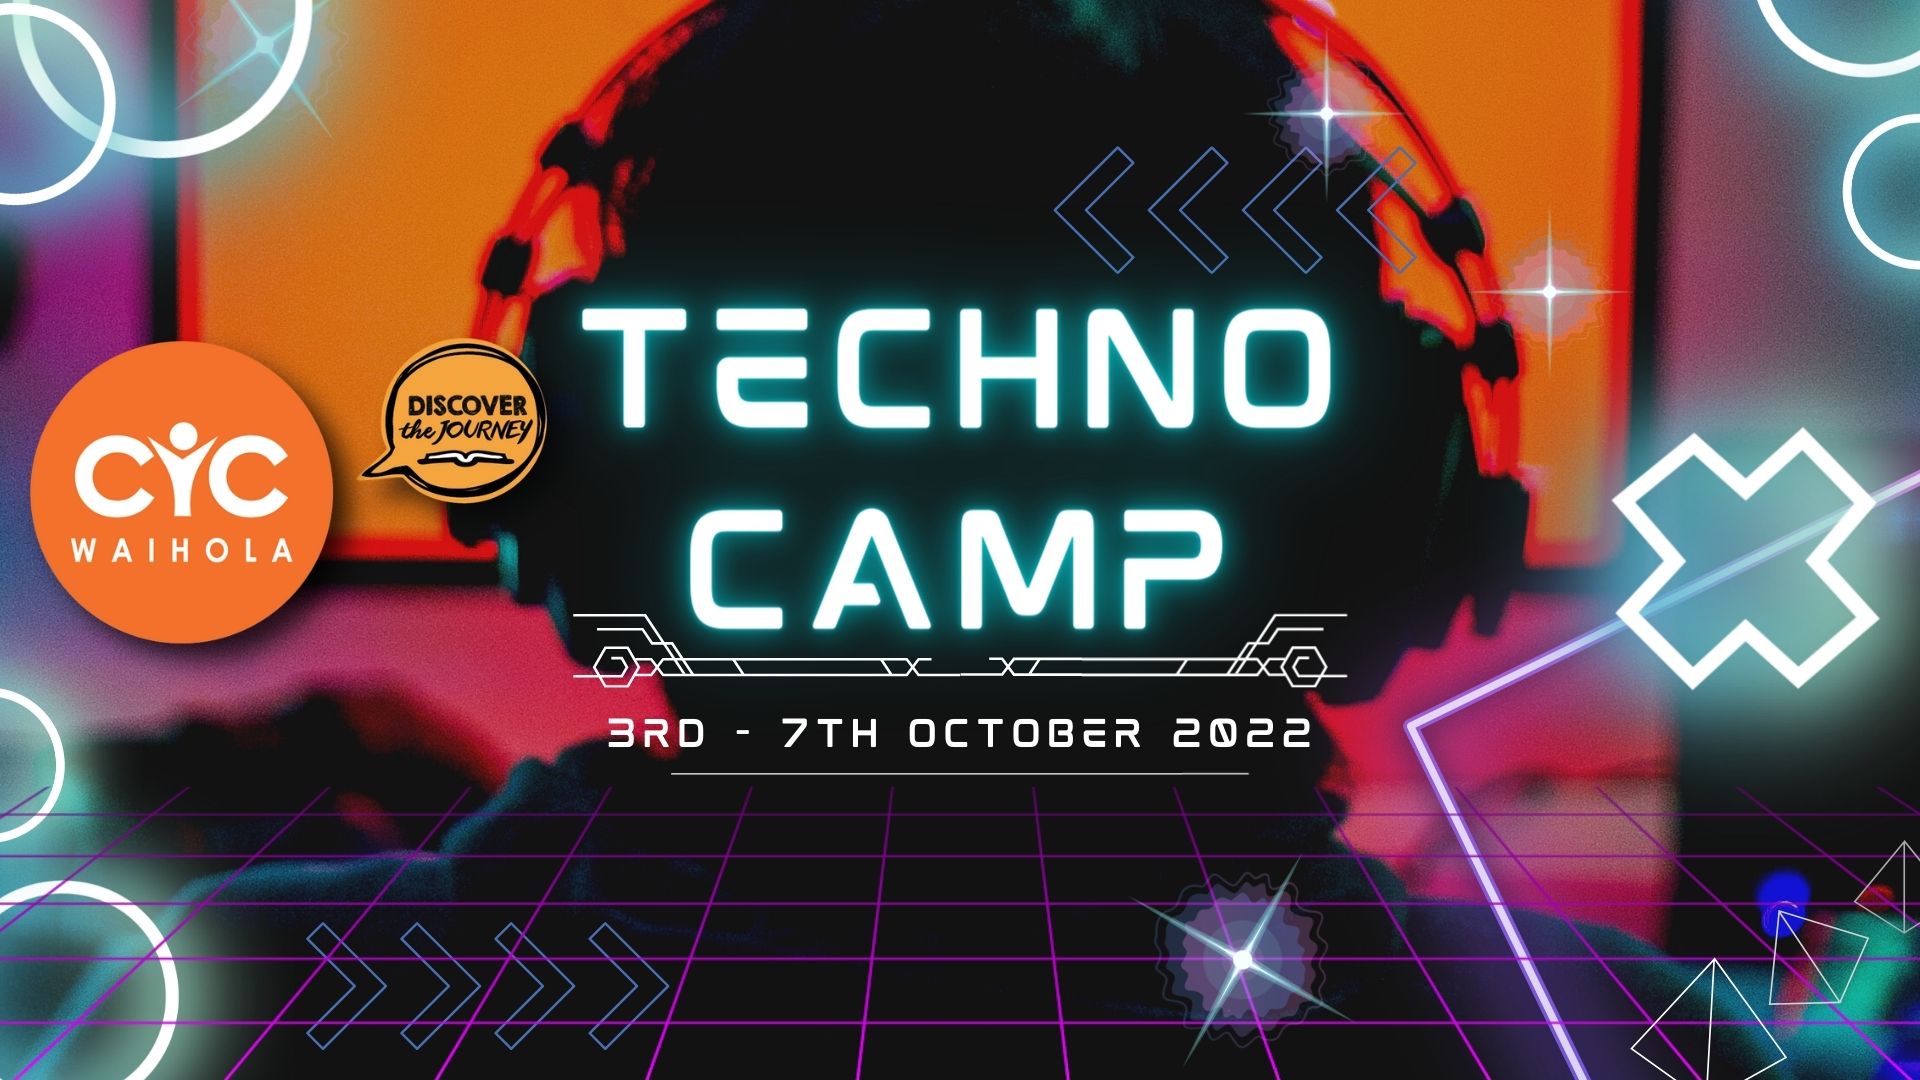 Techno Camp - Facebook Event Cover